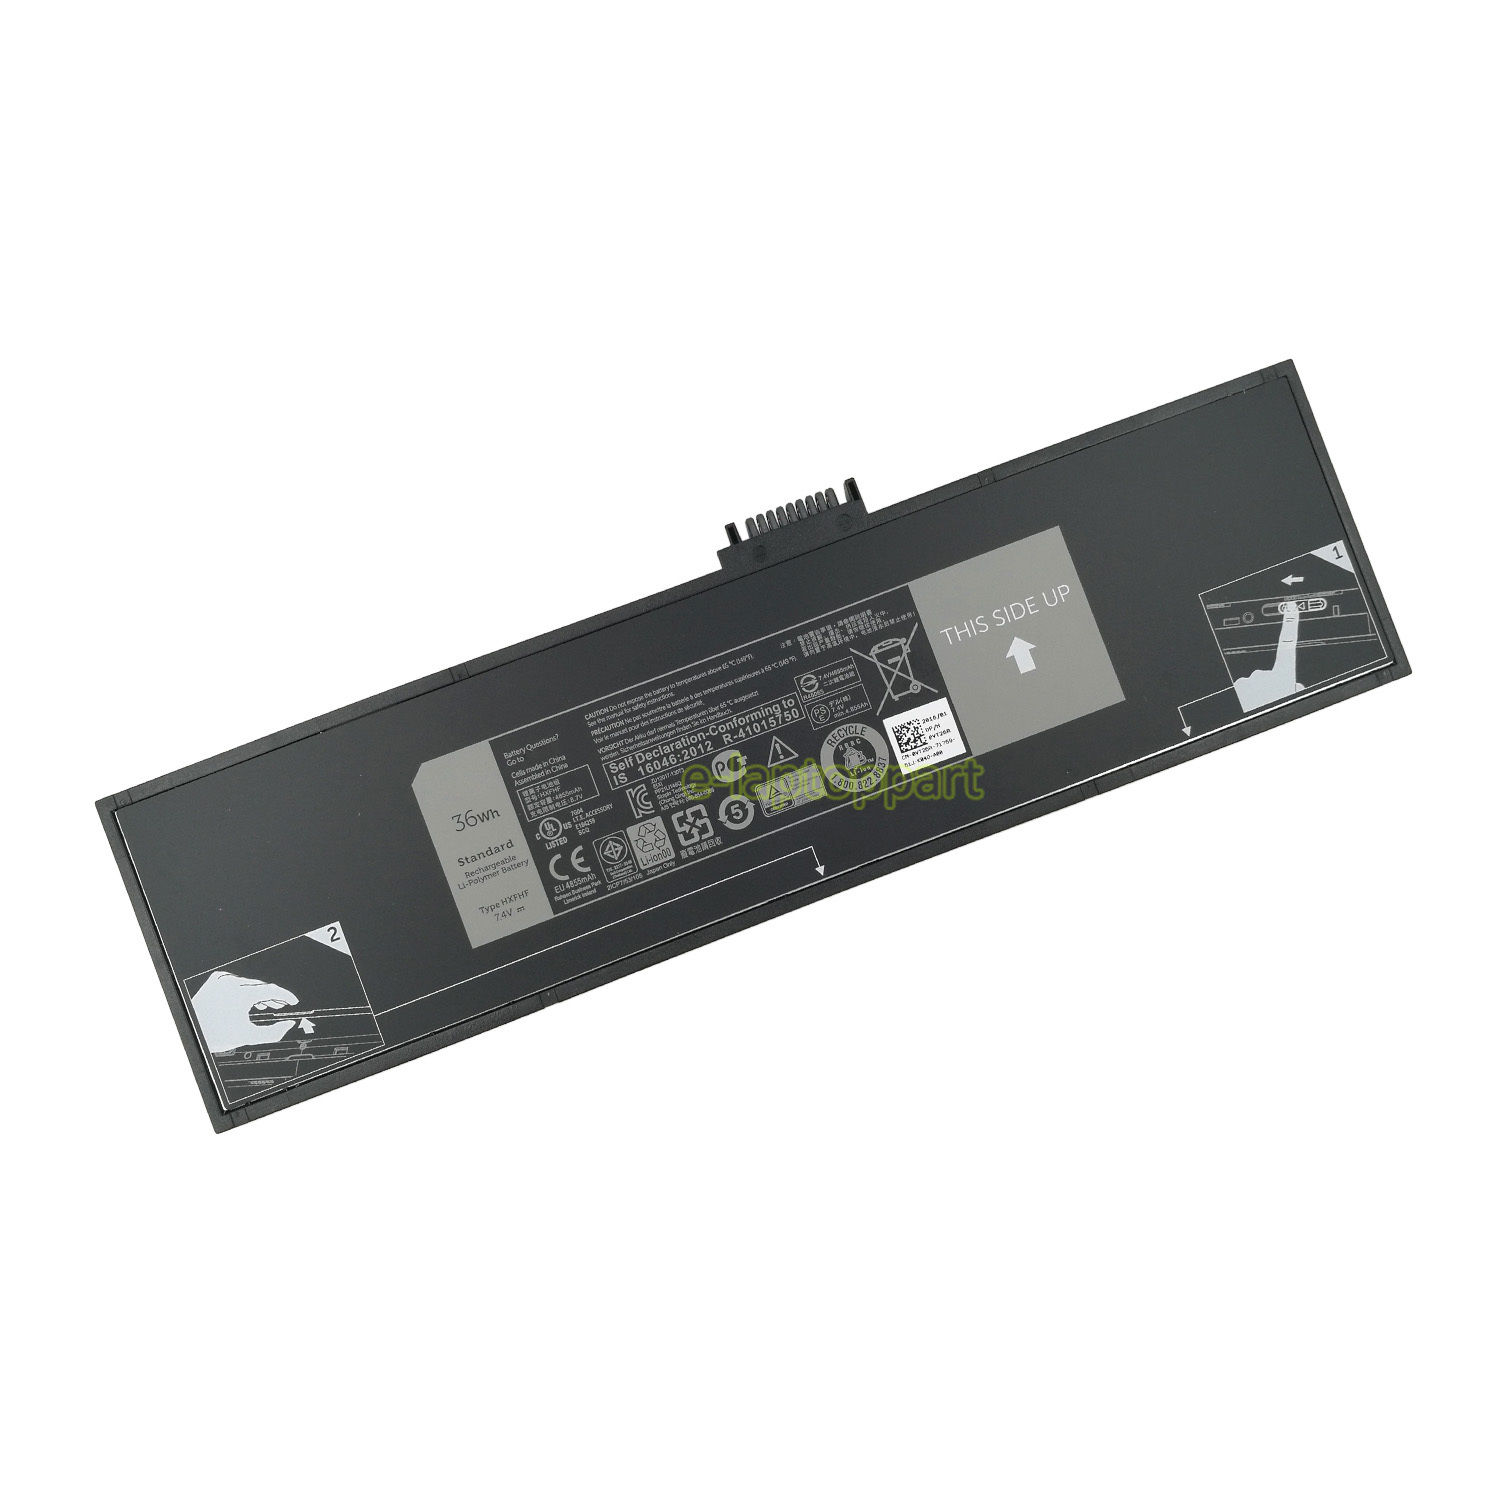 Batería para Dell Venue 11 Pro 7130/7139 7.4V 36Wh Li-polymer HXFHF(compatible)